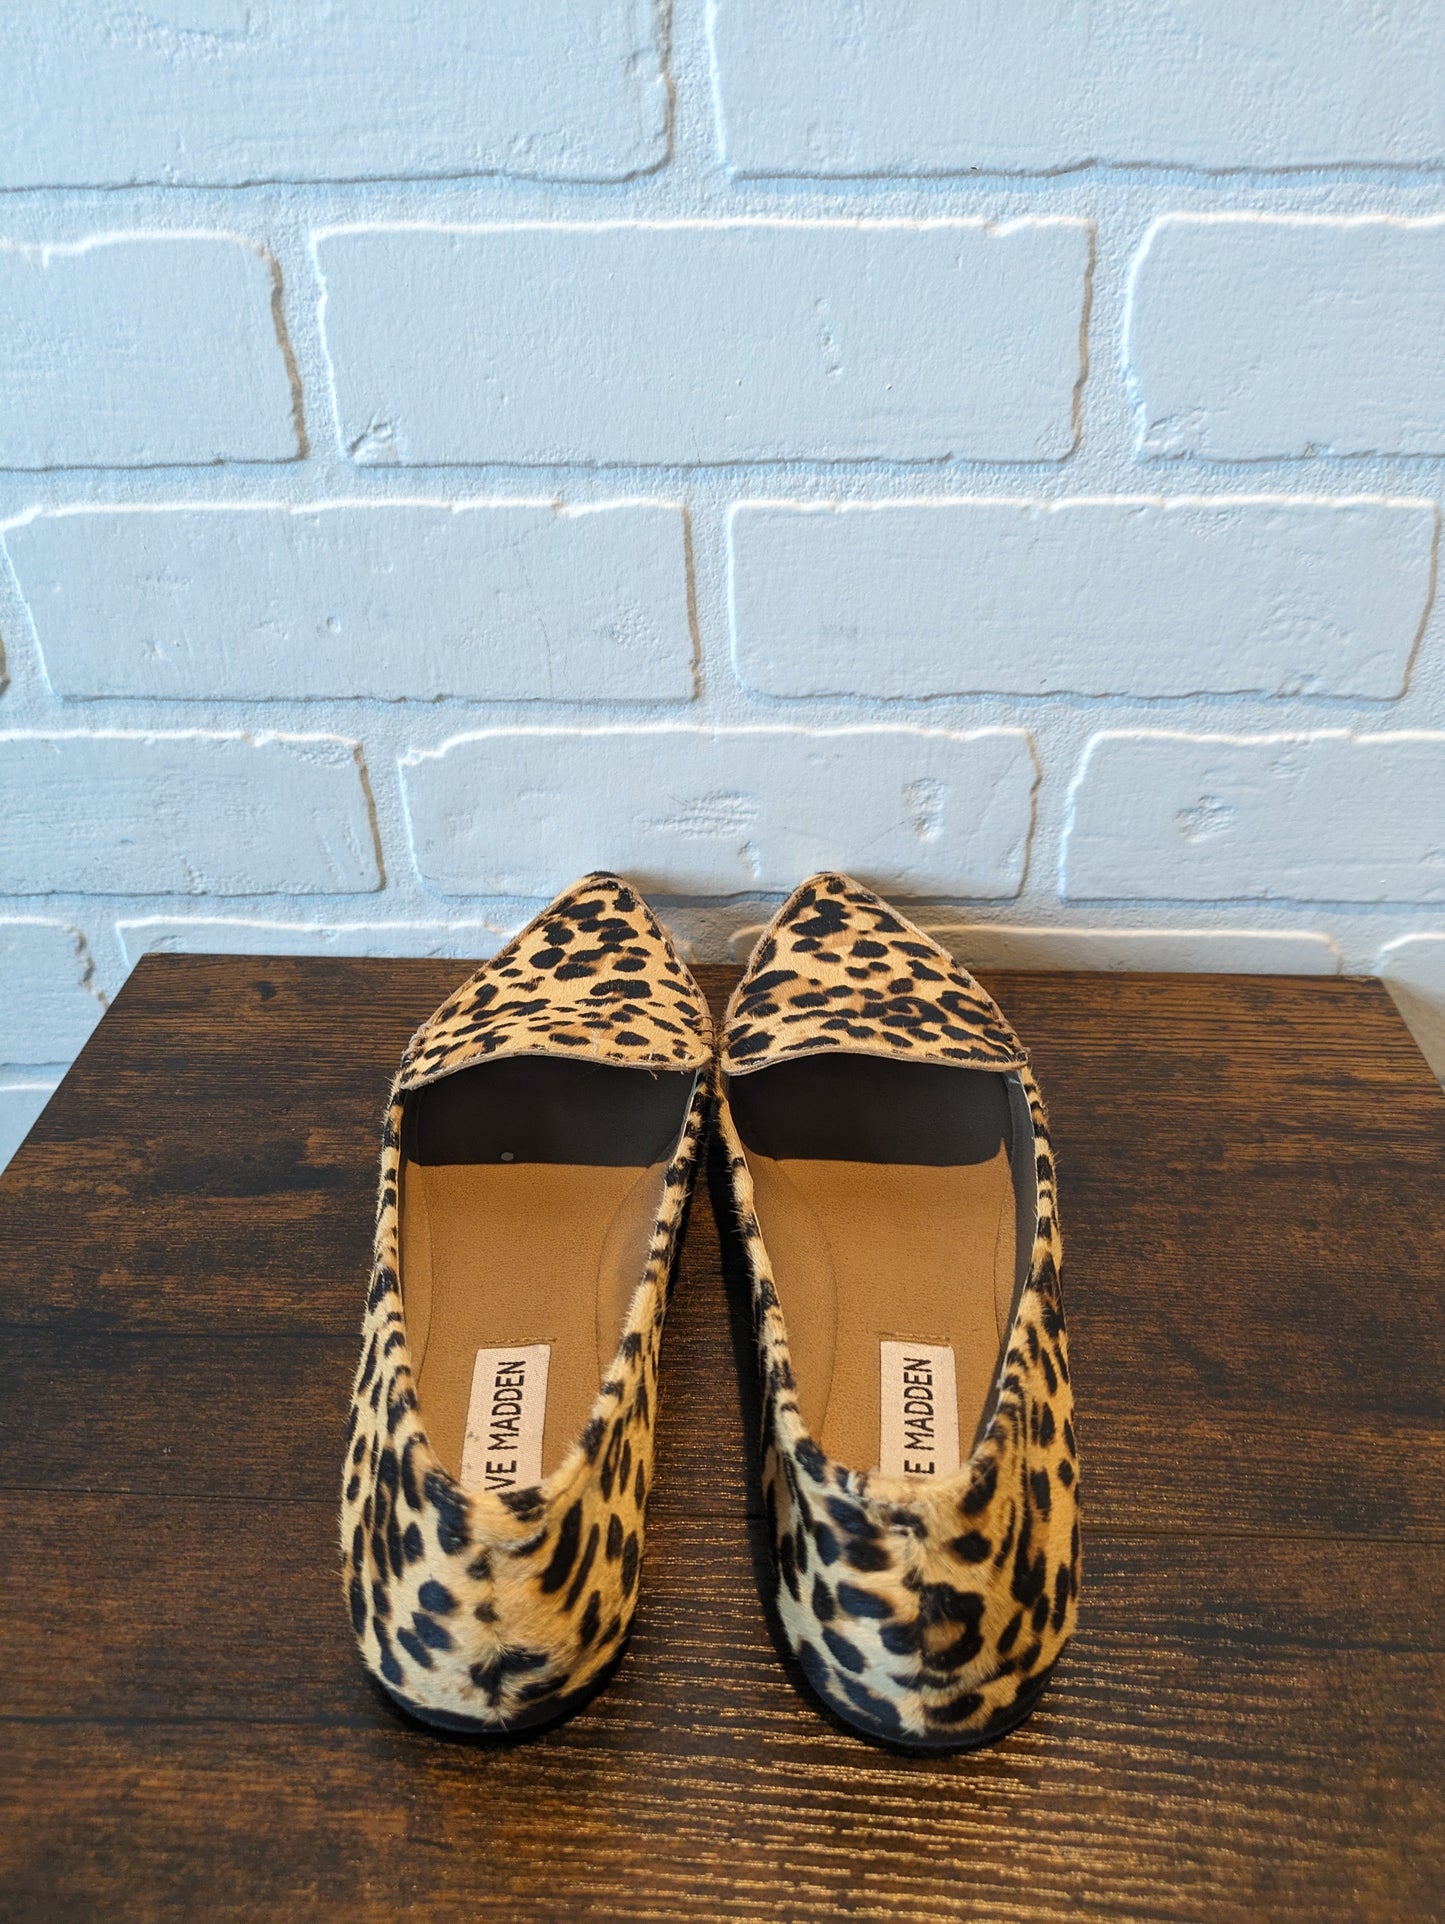 Animal Print Shoes Flats Steve Madden, Size 6.5